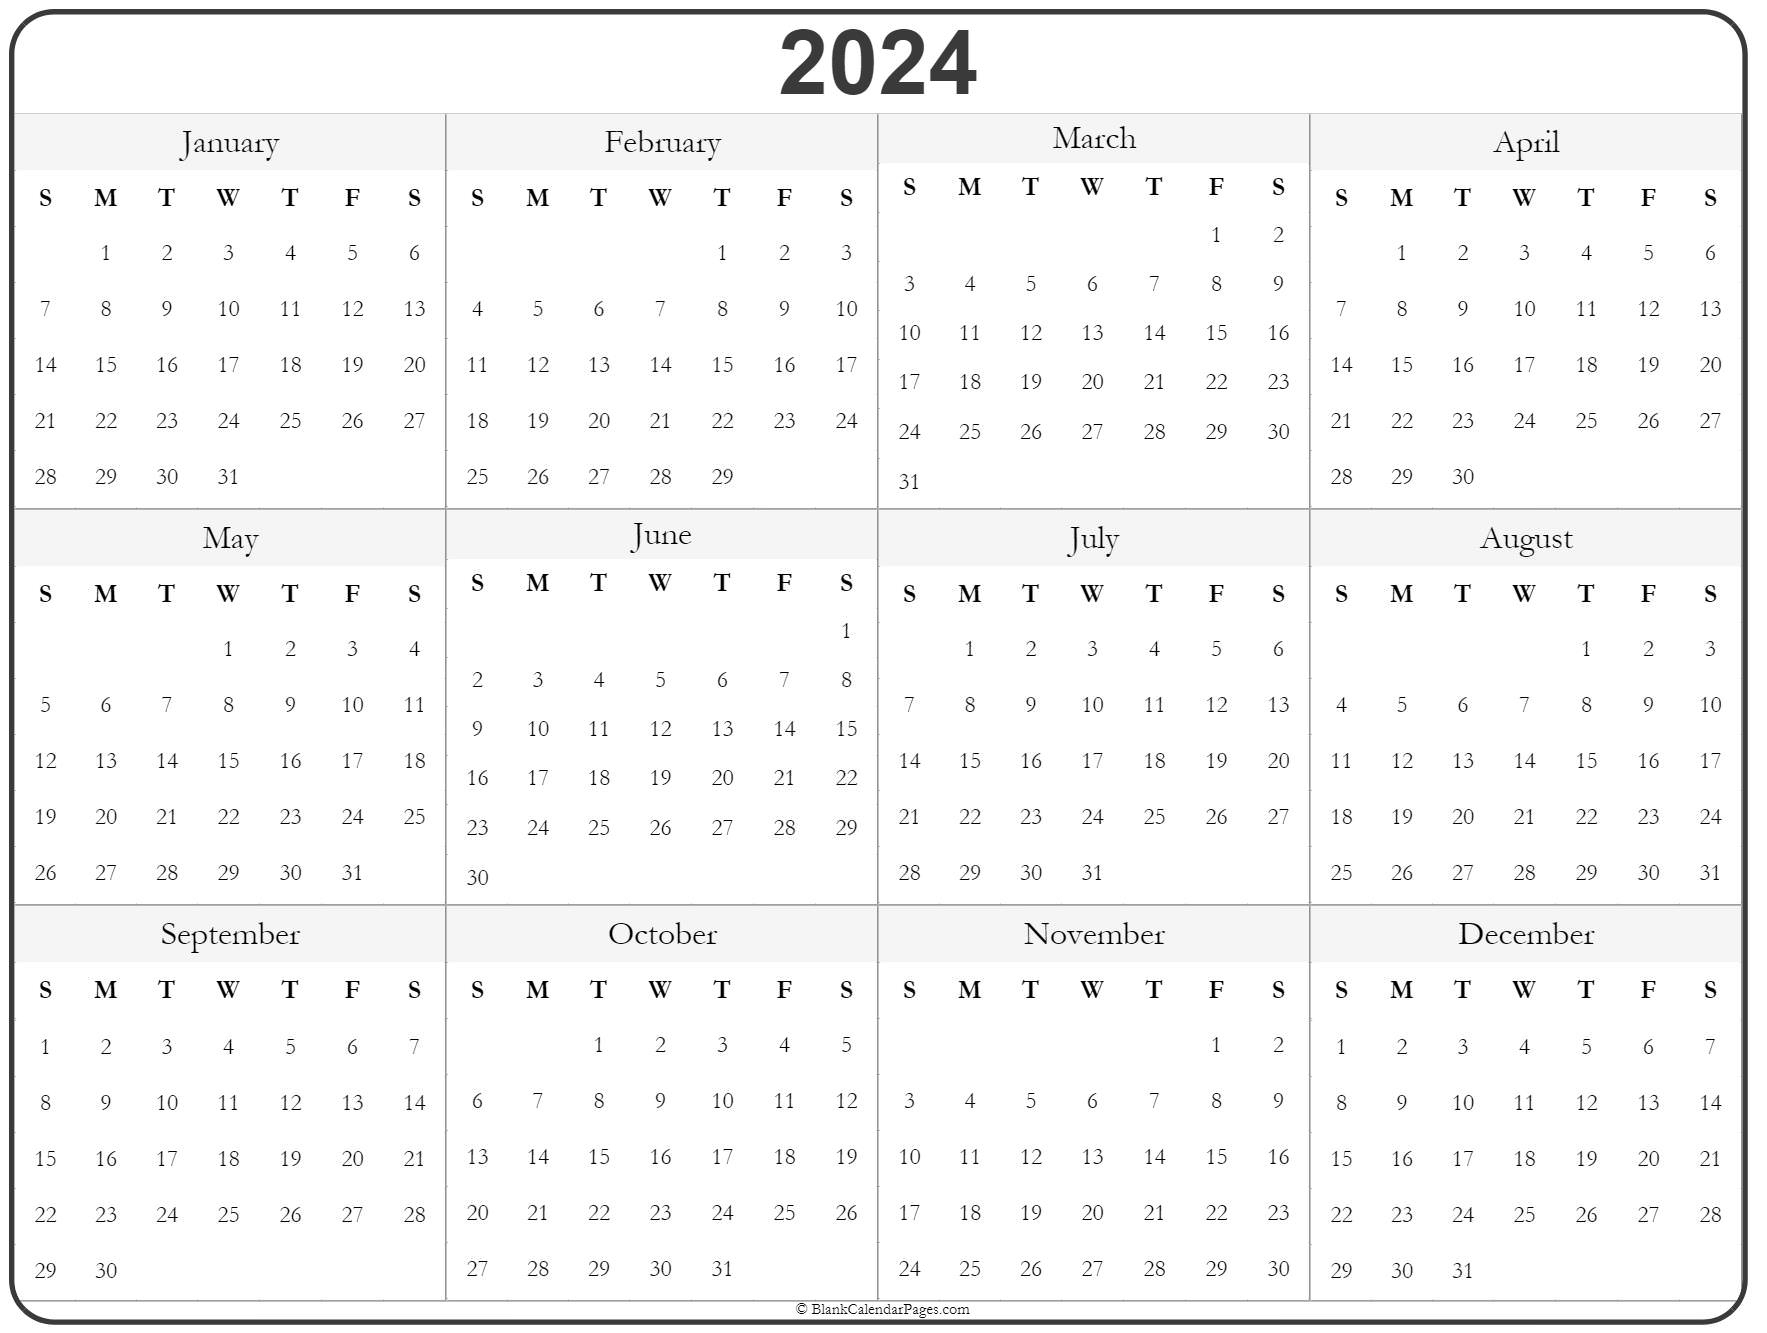 Yearly Calendar 2024 Calendar Quickly 2024 Yearly Calendar - Free Printable 2024 Calendar Full Year